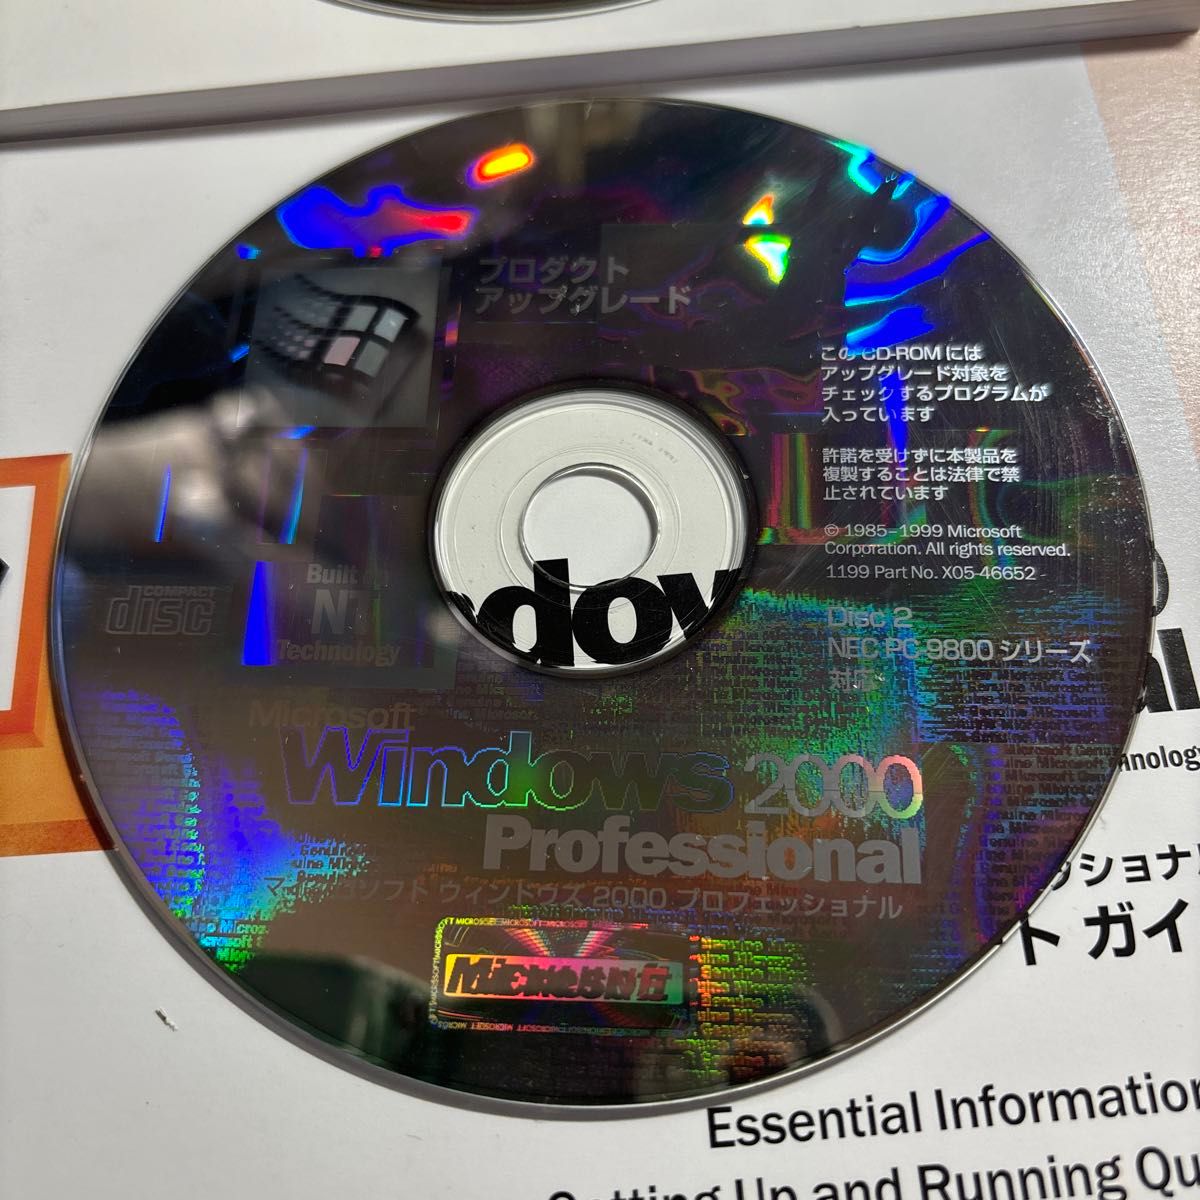 Windows2000 Professional PC/AT,PC-9800 対応　 Microsoft 日本語版